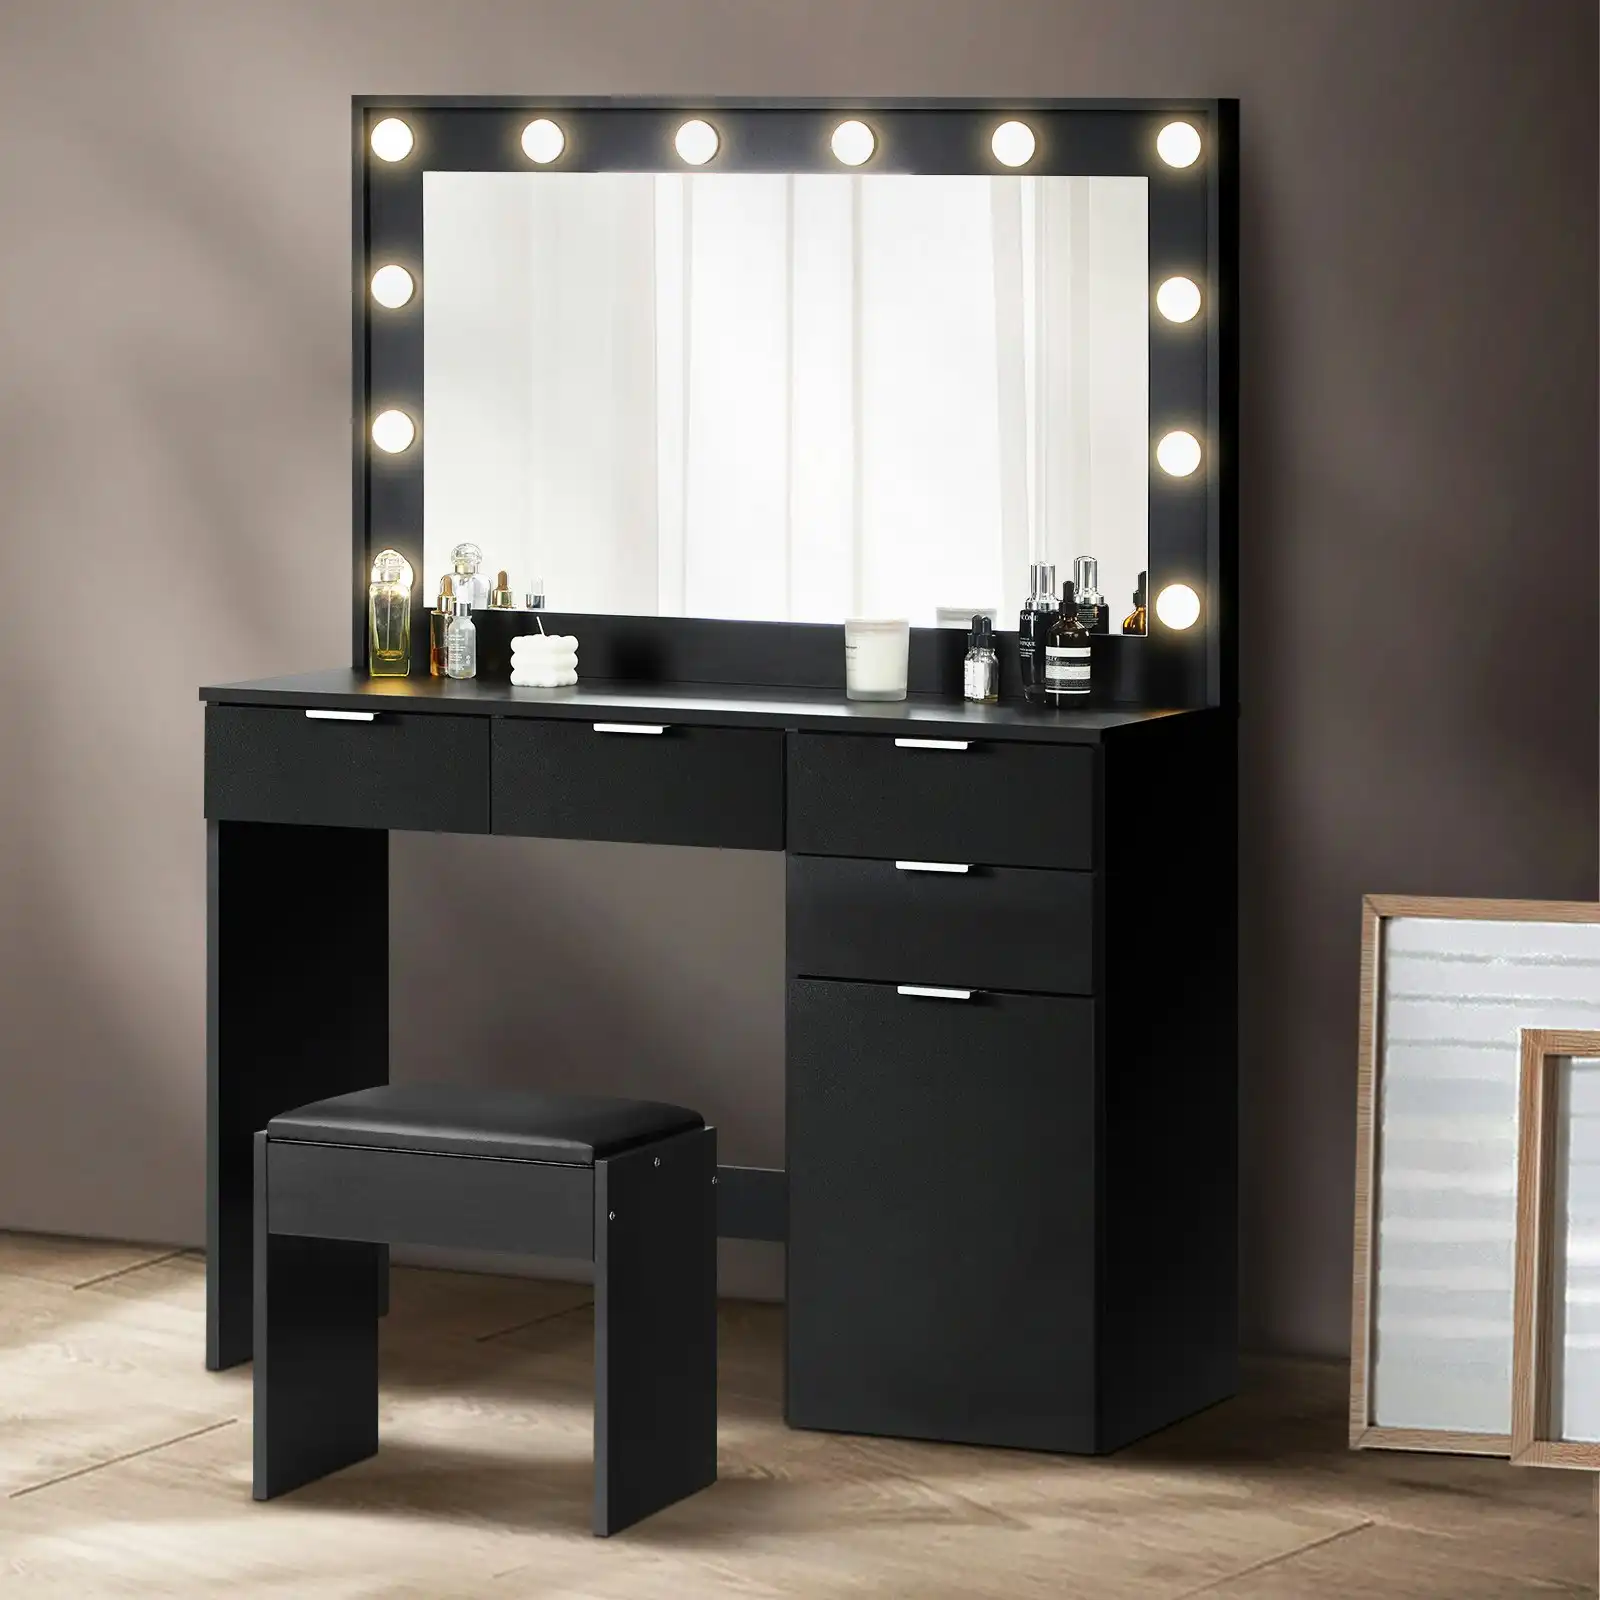 Oikiture Dressing Table Stool Set Makeup Large Mirror Dresser 12 LED Bulbs Black